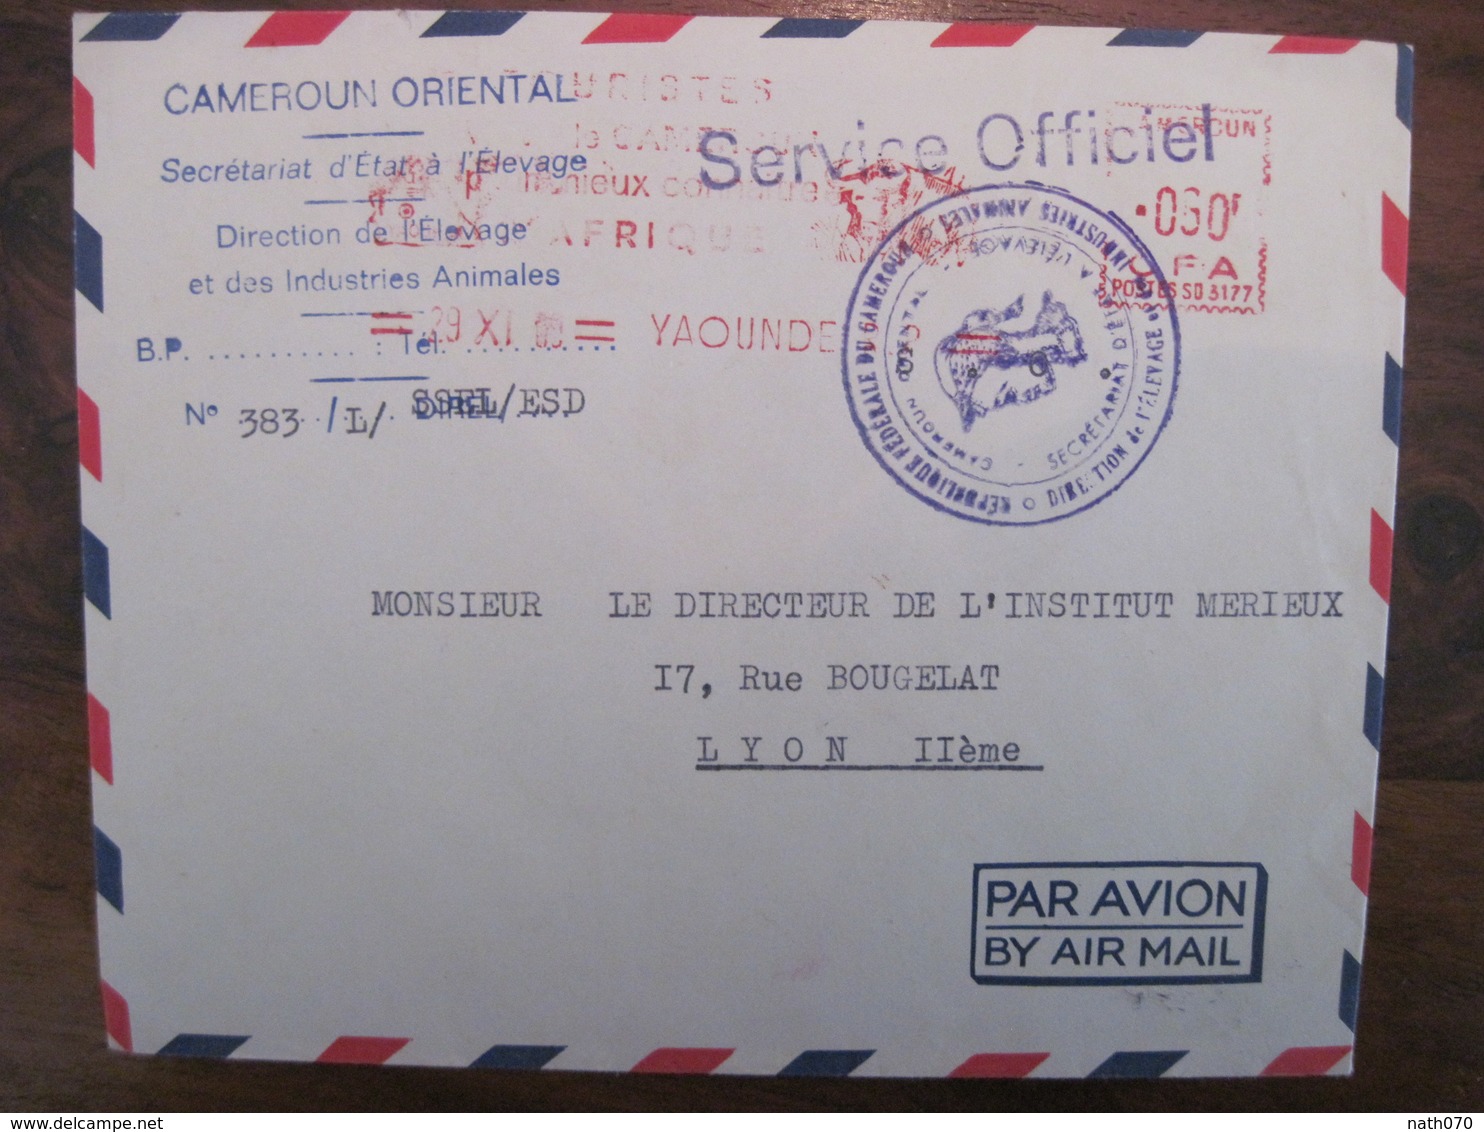 CAMEROUN Oriental France Institut MERIEUX Lettre Enveloppe Cover Colonie AOF - Storia Postale